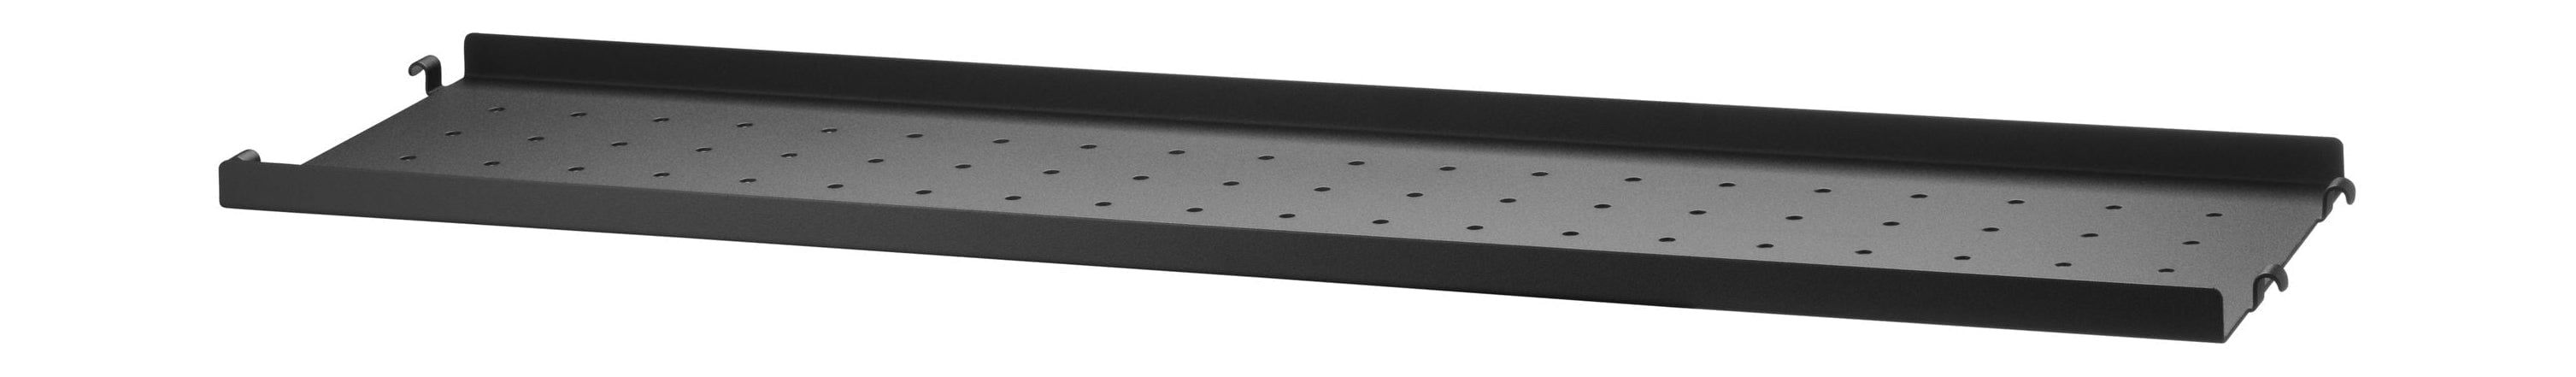 Strengmøbler Strengsystem Metalhylde med lav kant 20x78 cm, sort